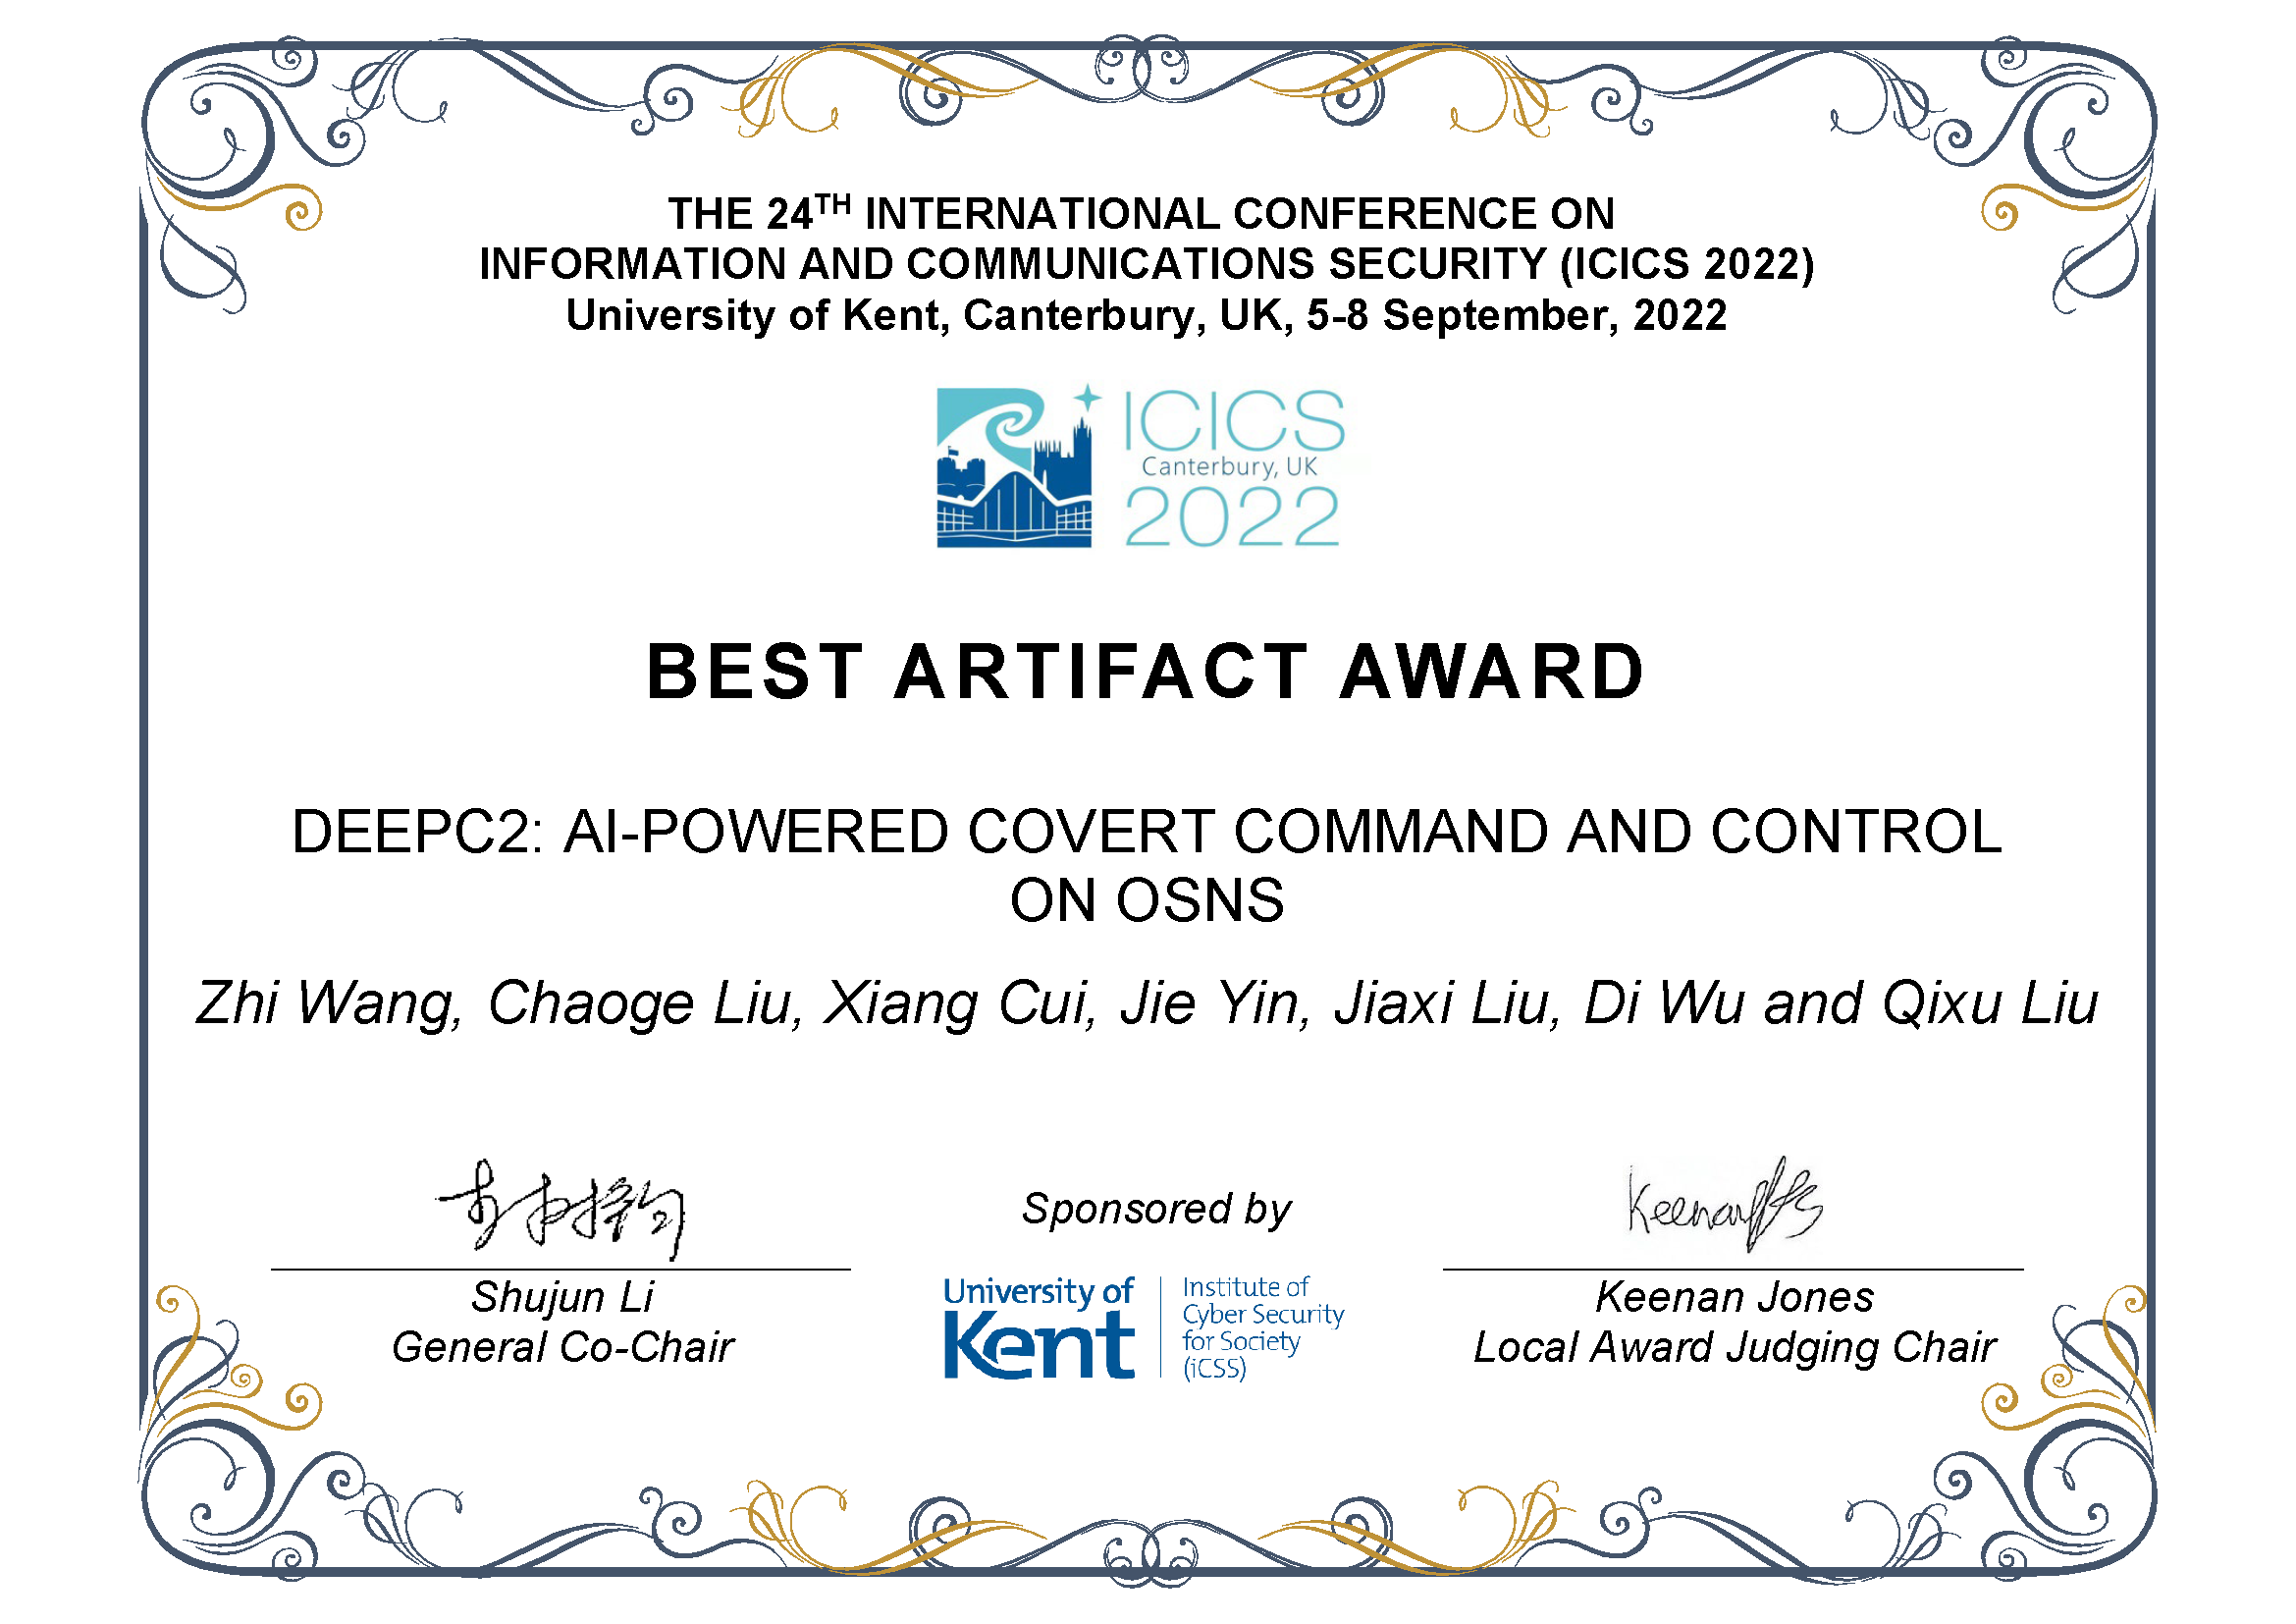 Certificate for ICICS 2022 Best Artifact Award